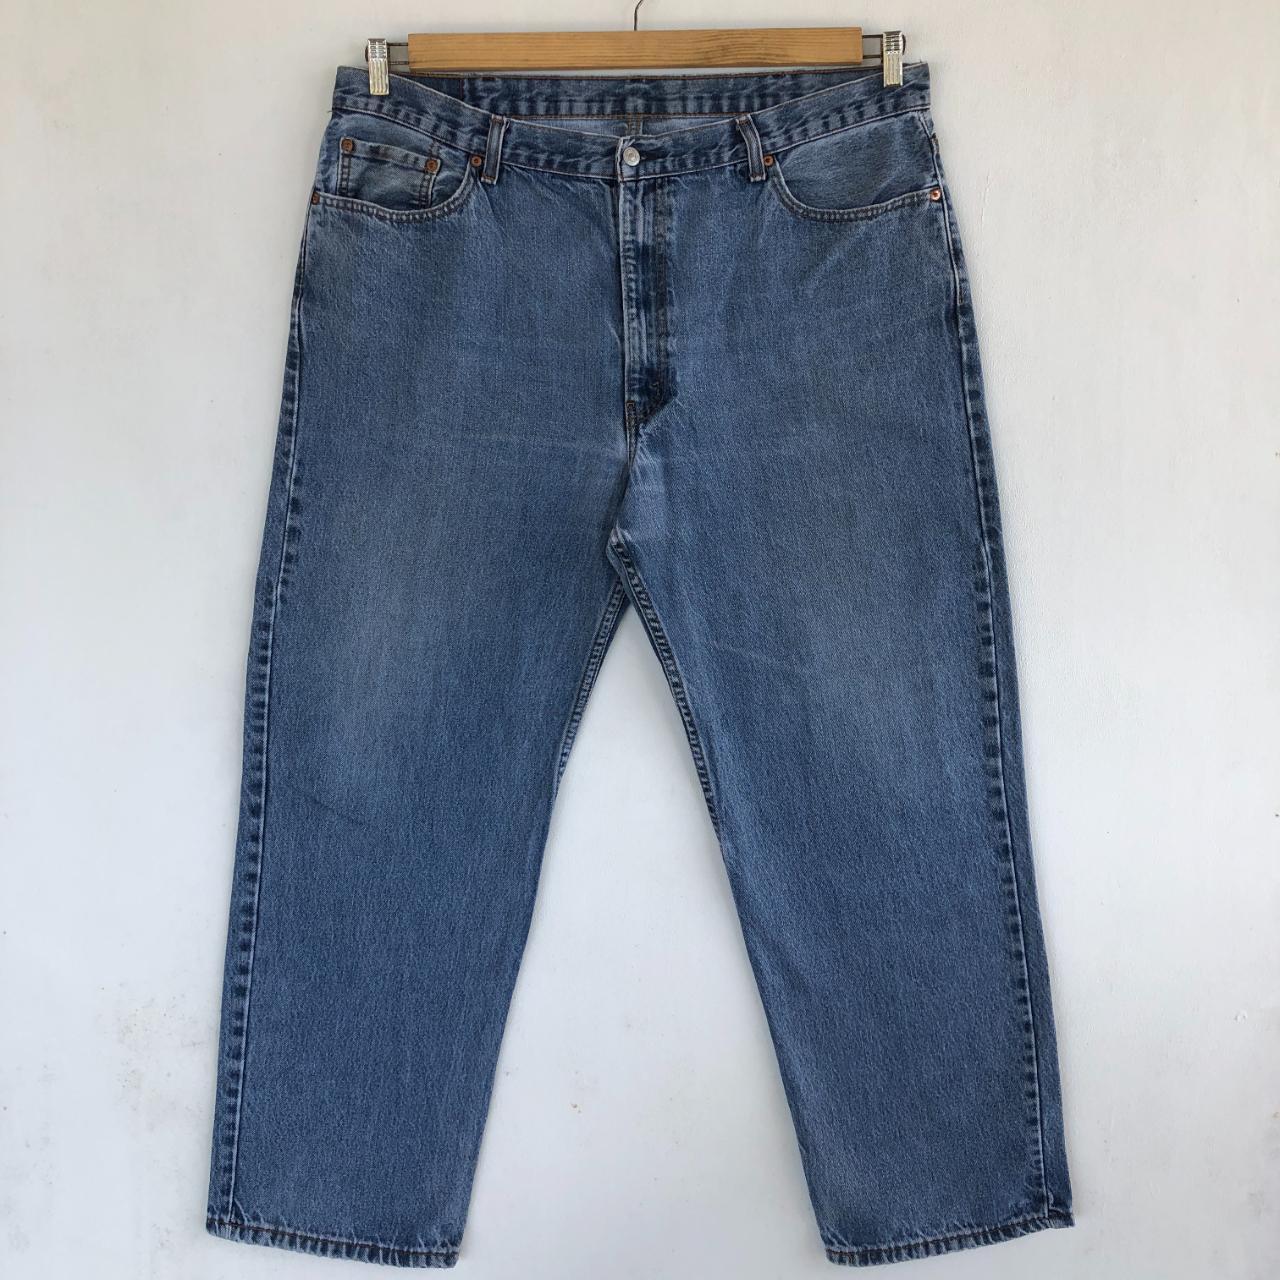 Vintage Levi's Faded Jeans Levis 550 Light Wash... - Depop